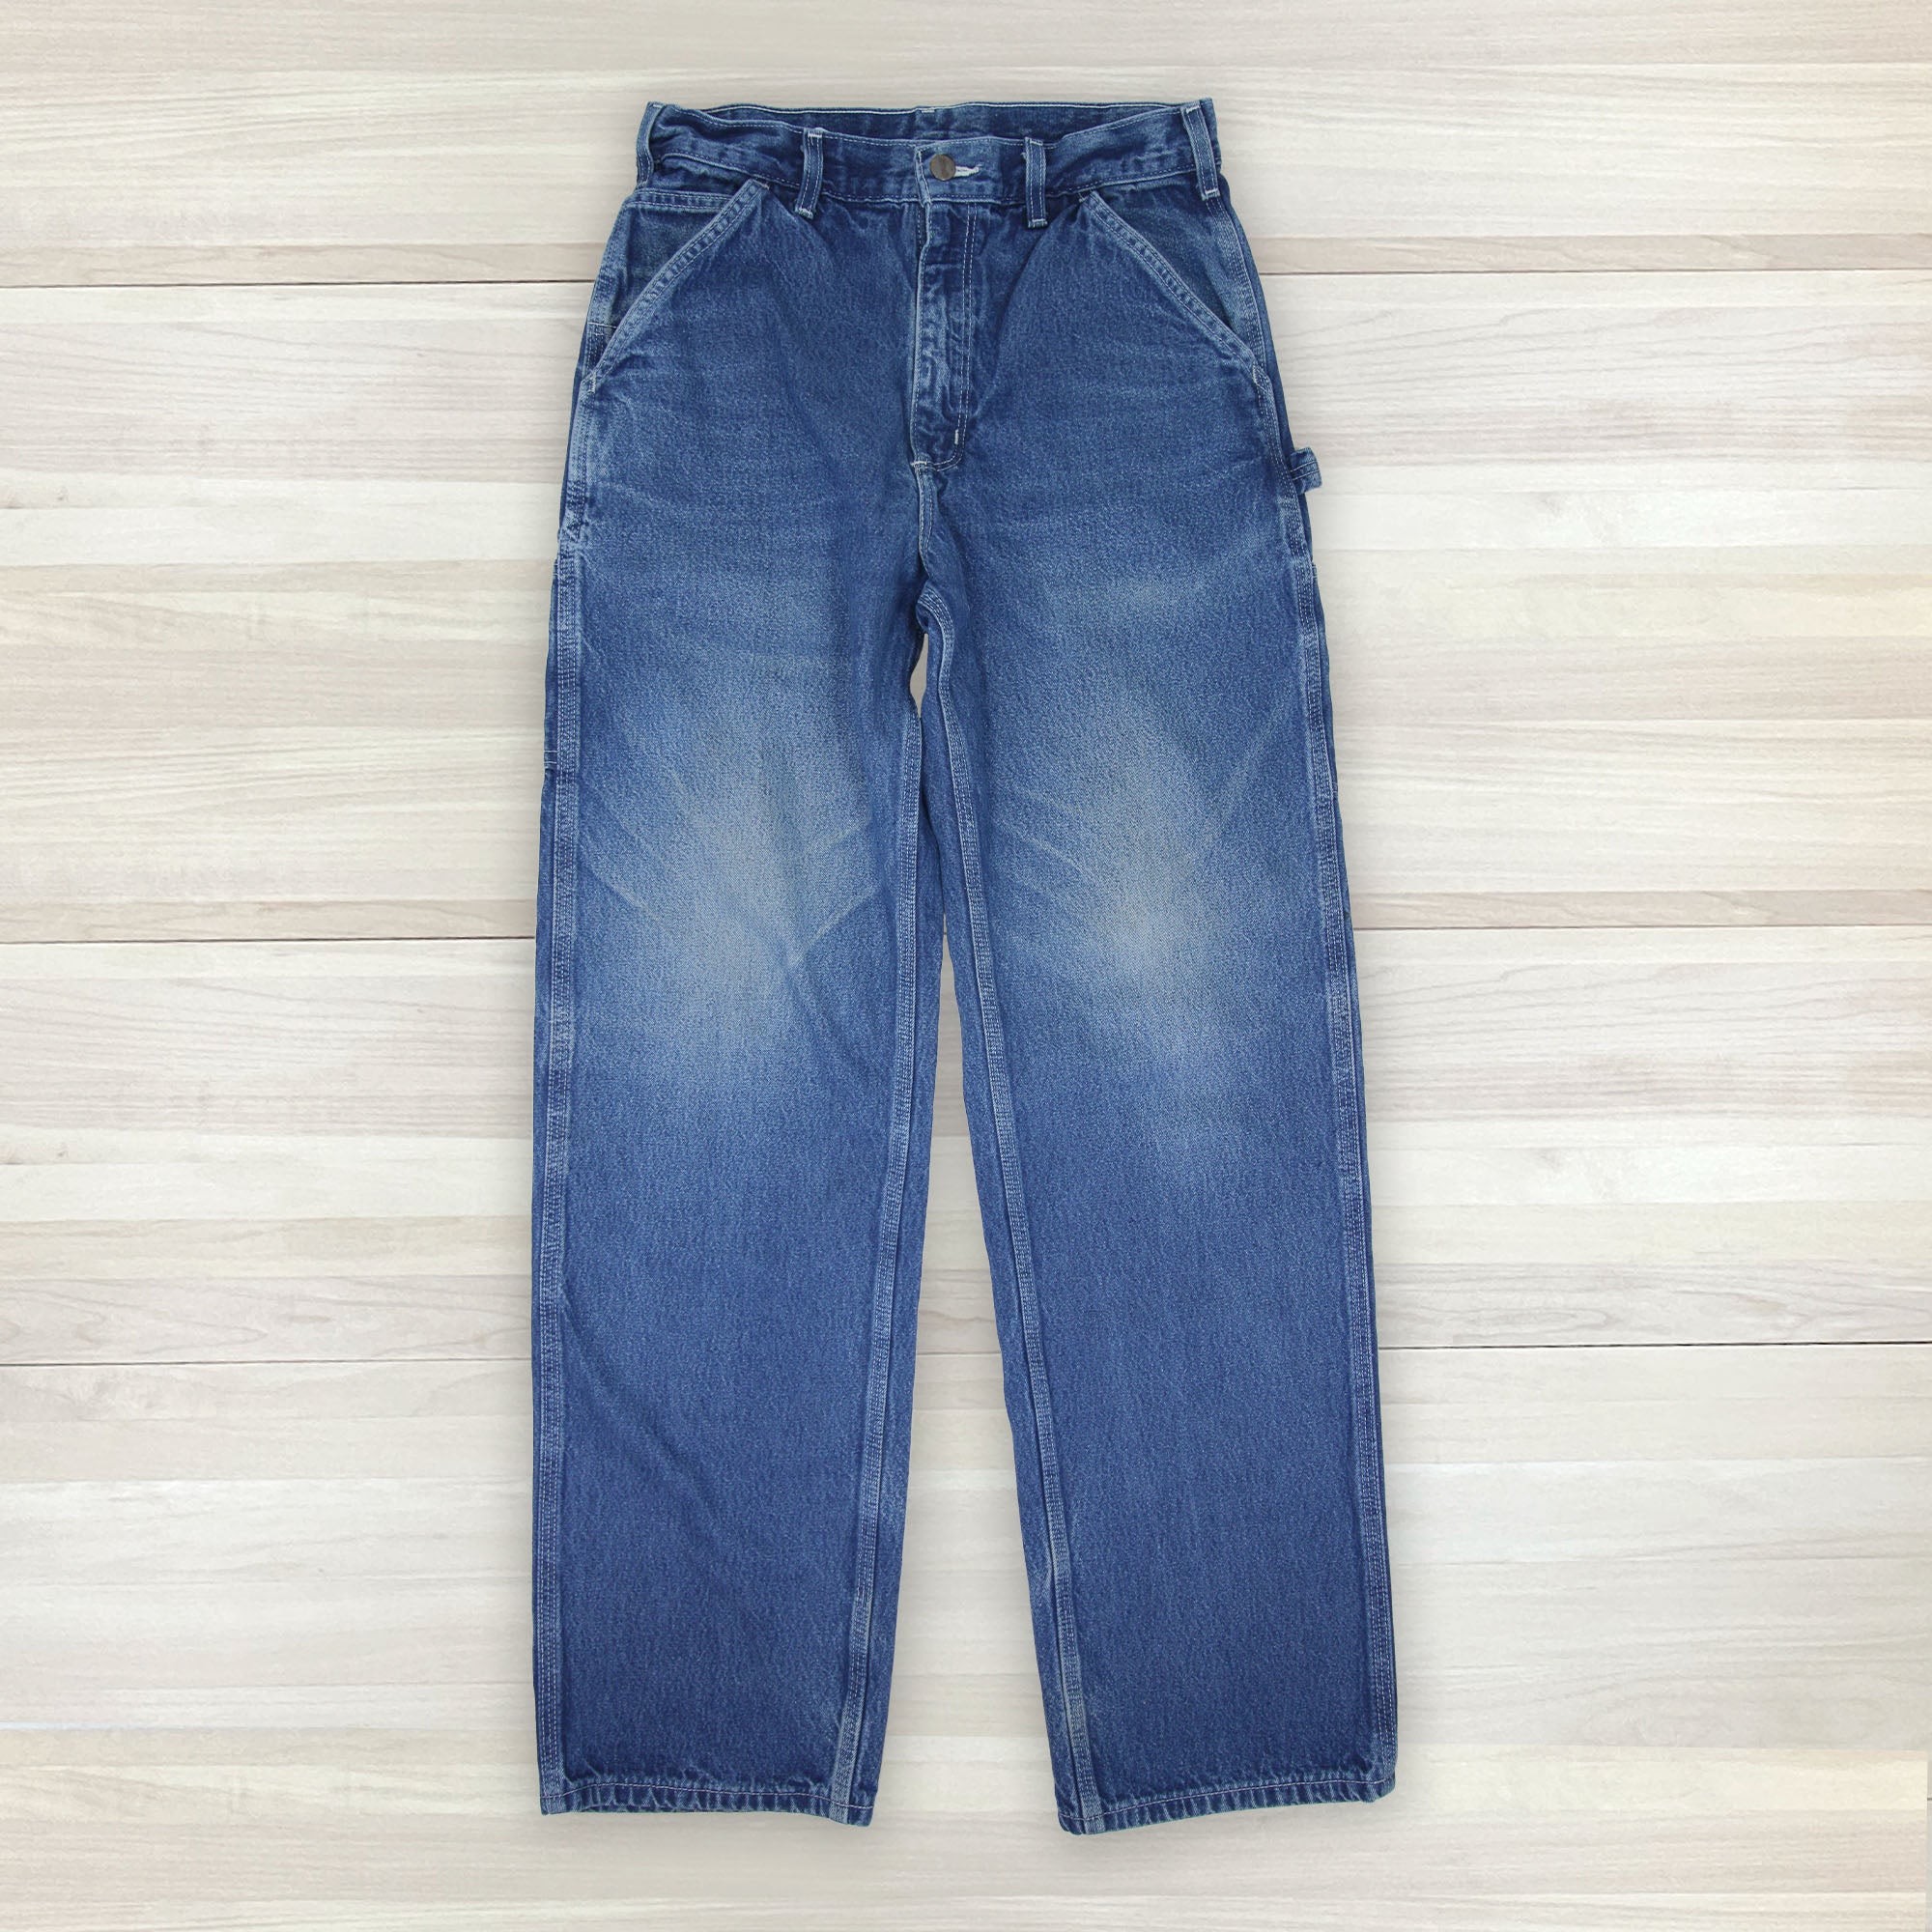 Men's Carhartt B13 DST Carpenter Jeans - Measures 30x33-1